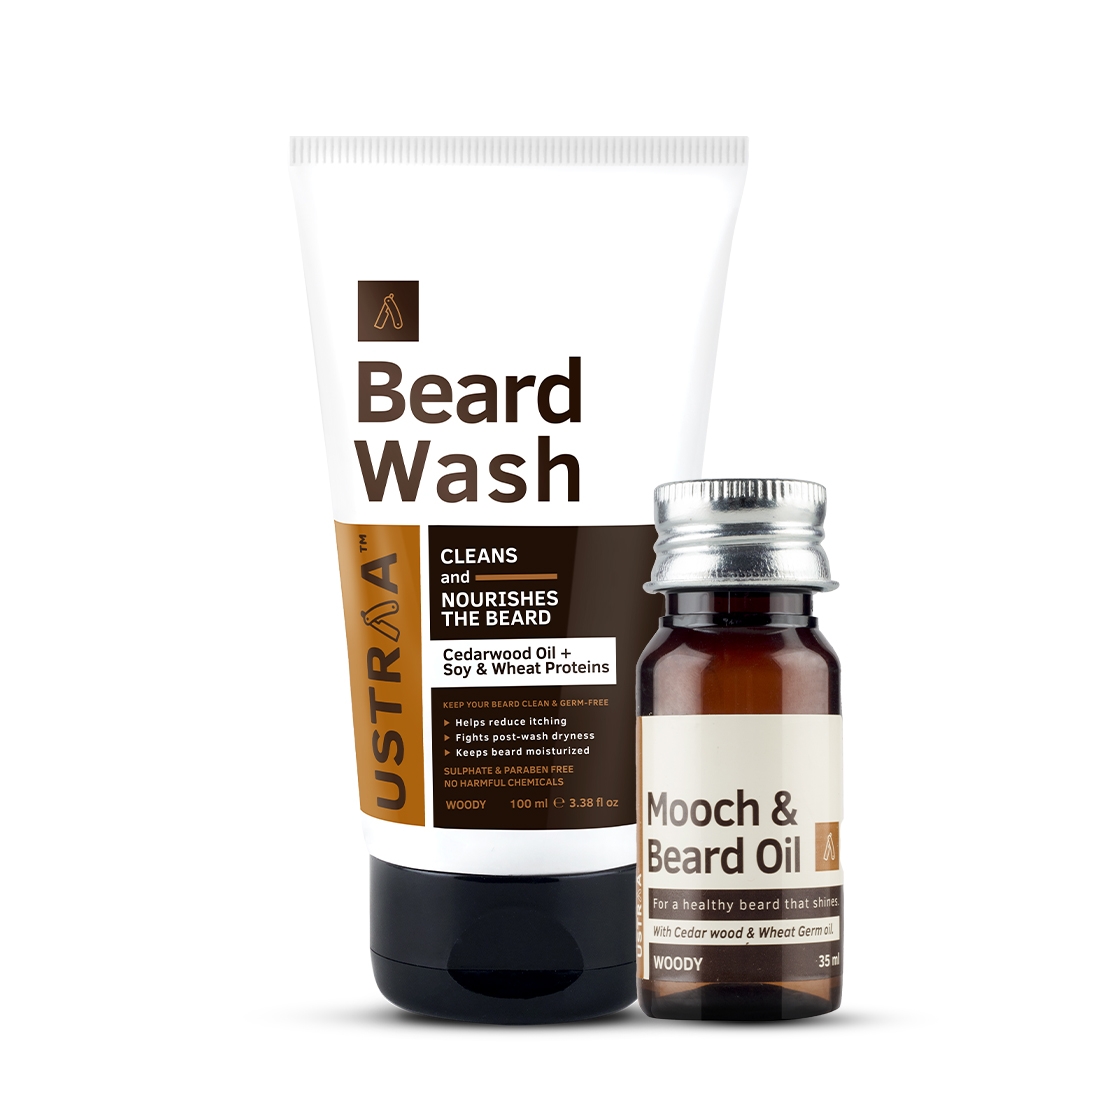 Ustraa Beard Oil Woody - 35ml And Beard Wash Woody - 60ml